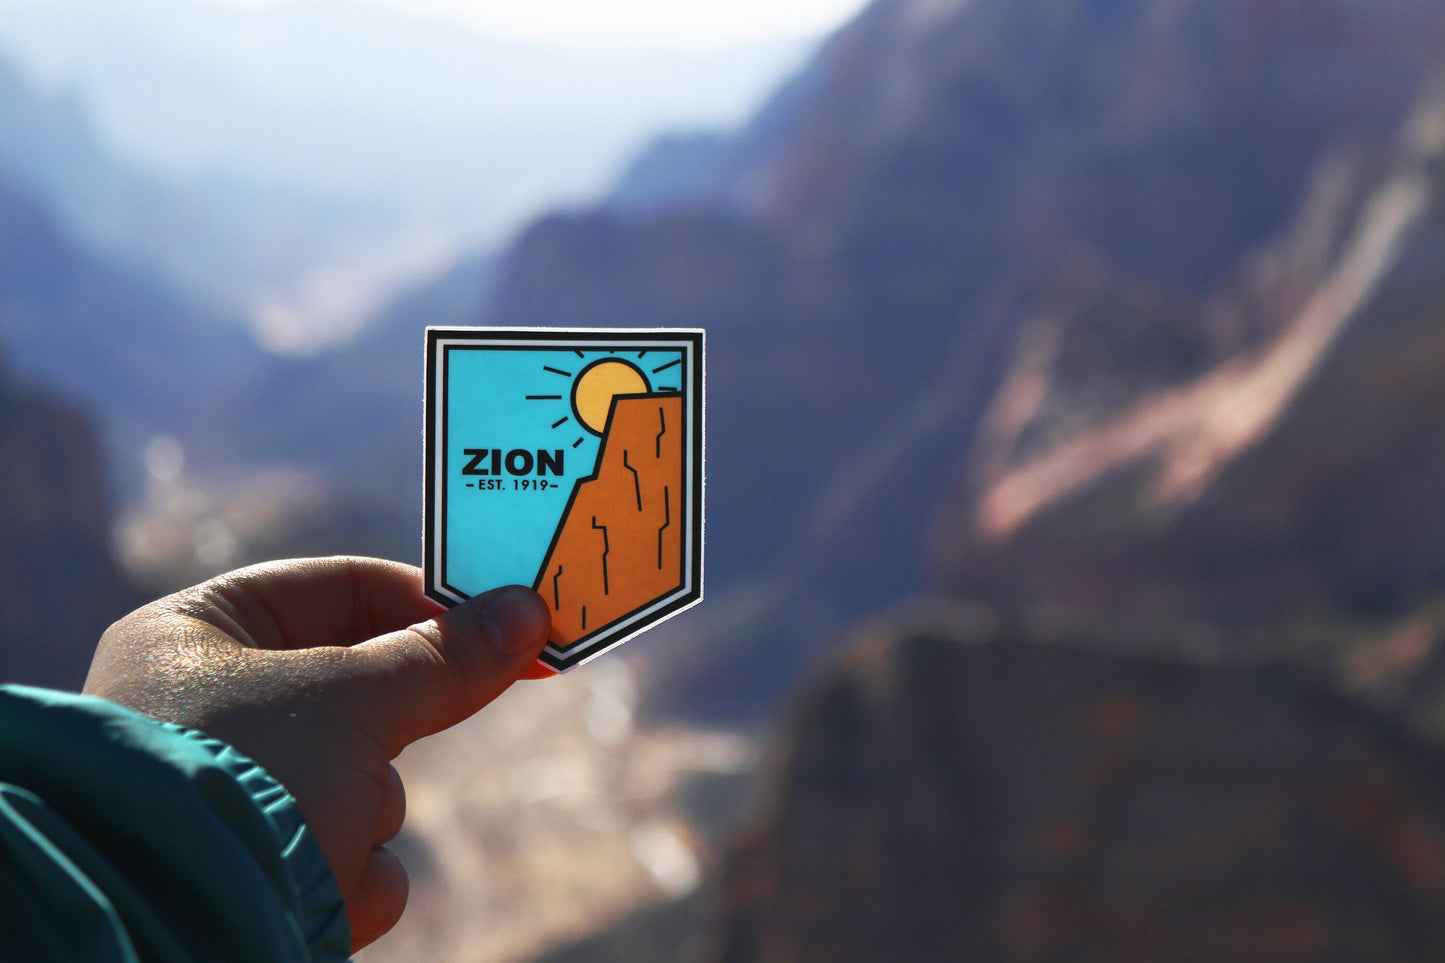 Zion National Park Car Sticker